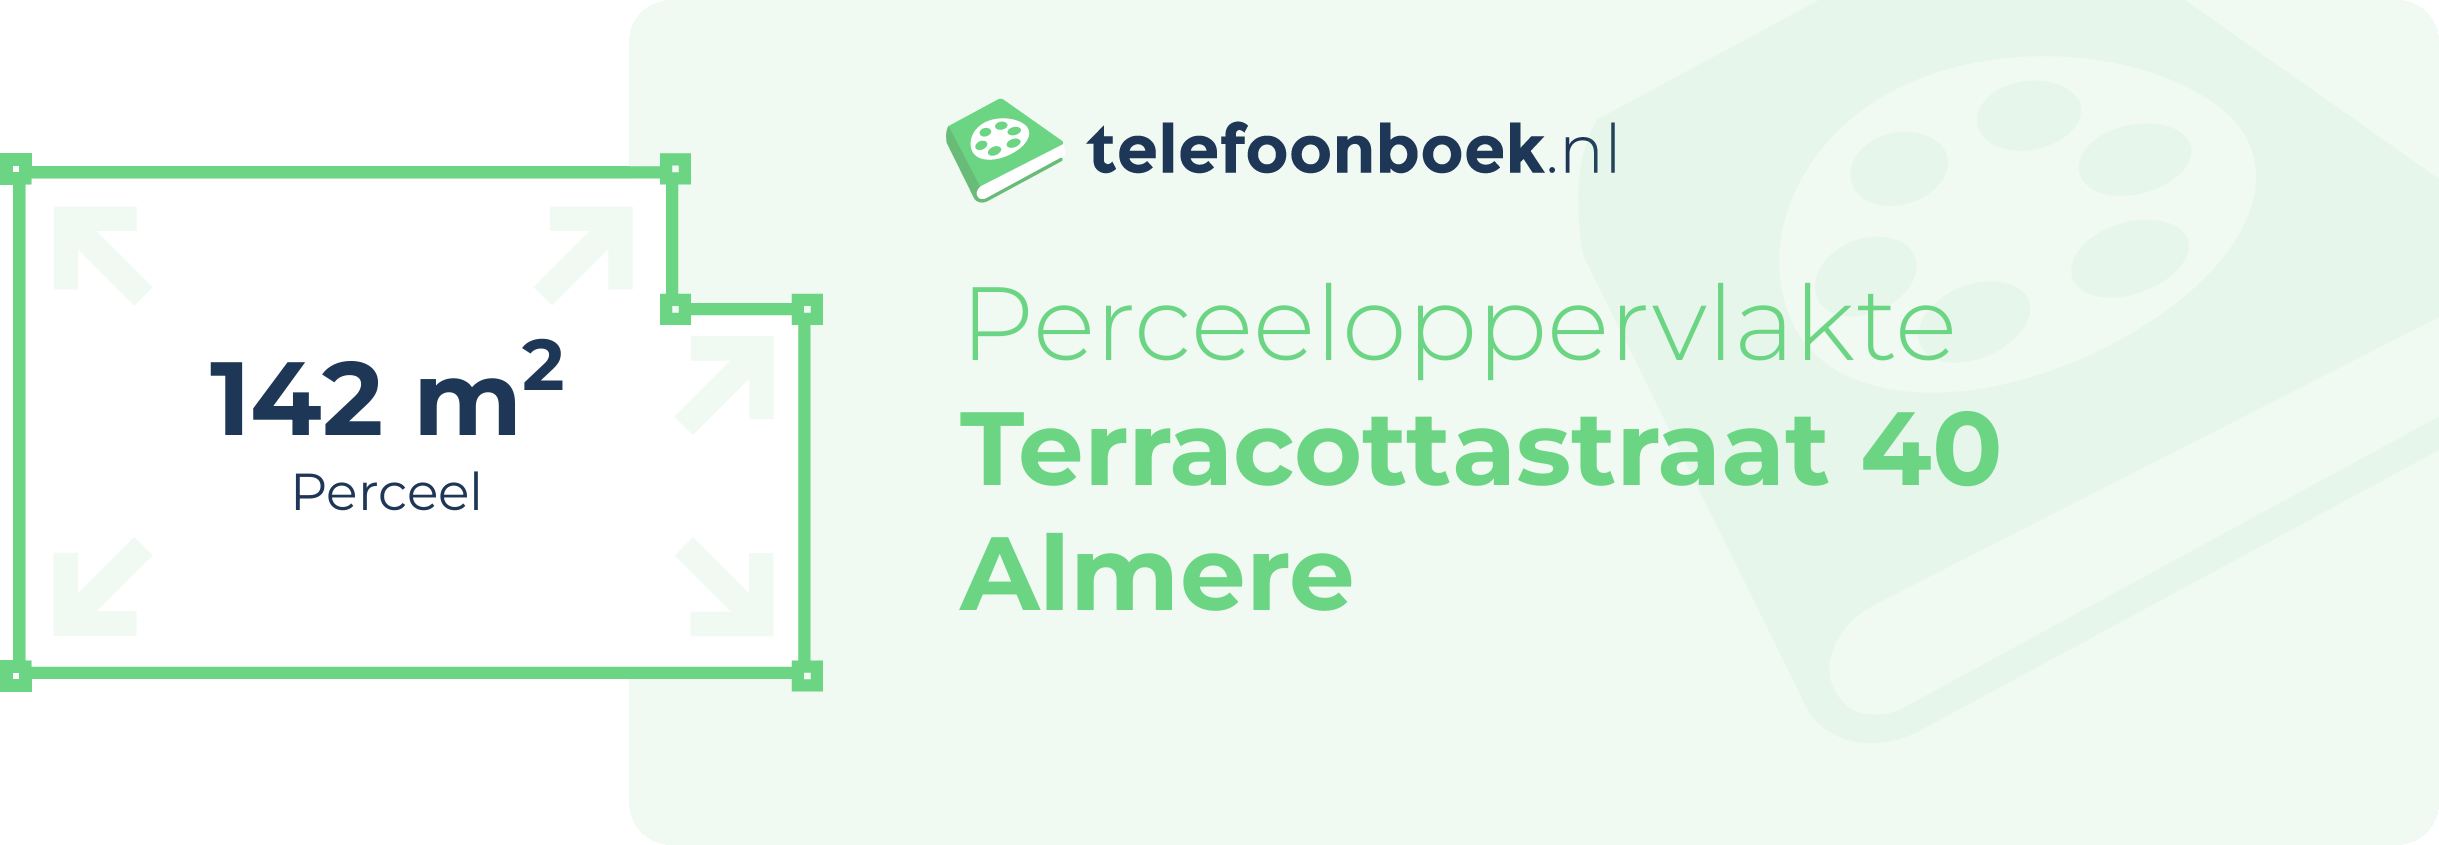 Perceeloppervlakte Terracottastraat 40 Almere